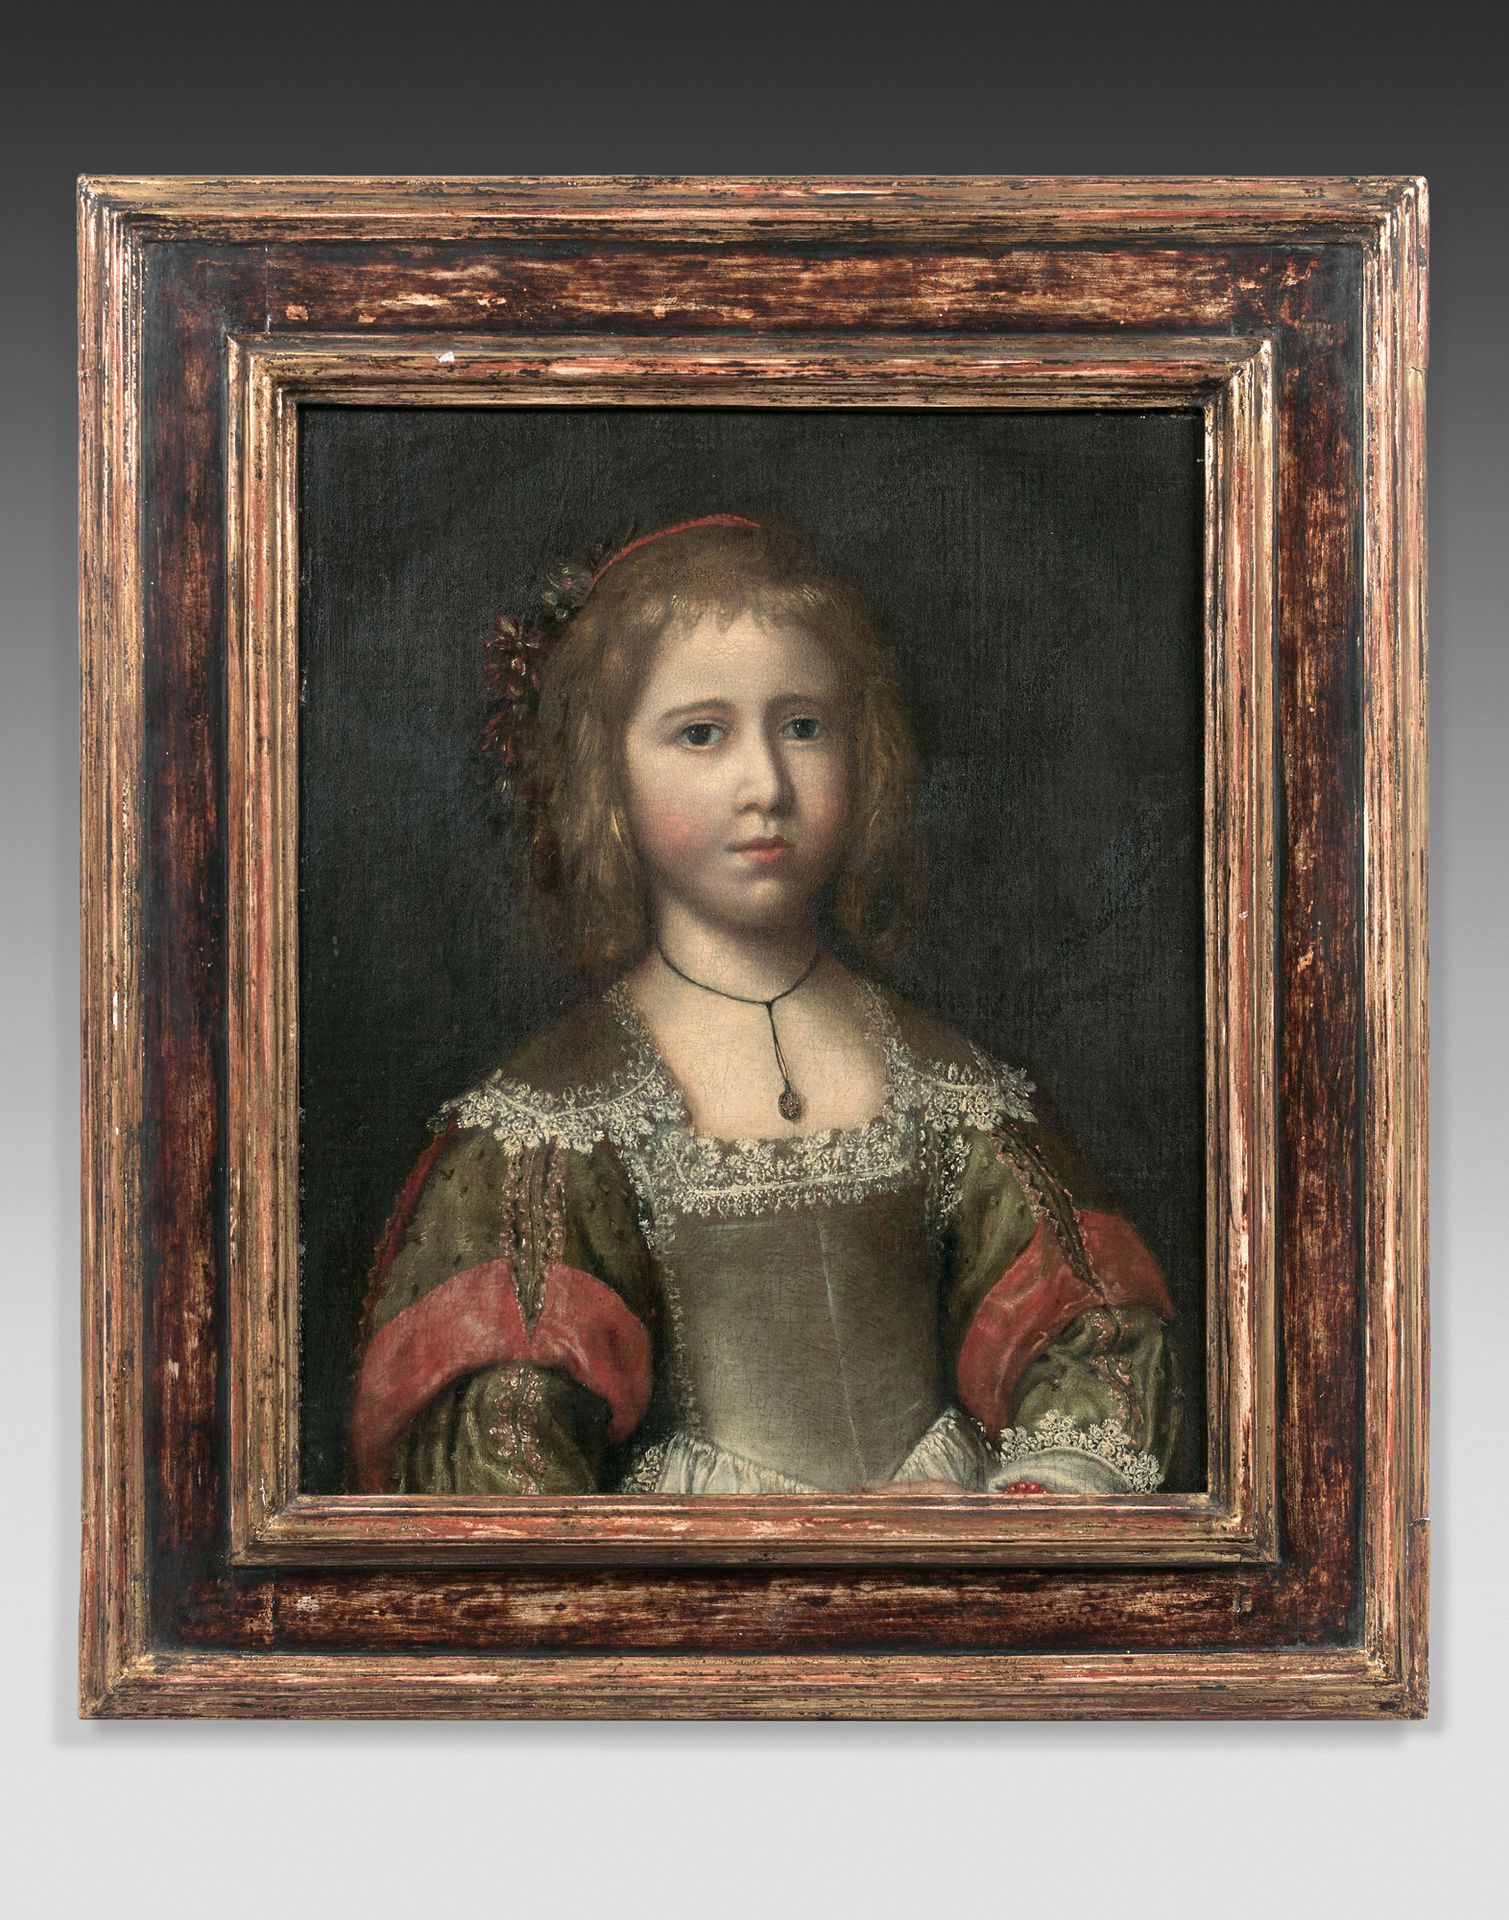 École FRANÇAISE vers 1650 一个年轻女孩的肖像
画布。
53 x 43.5厘米